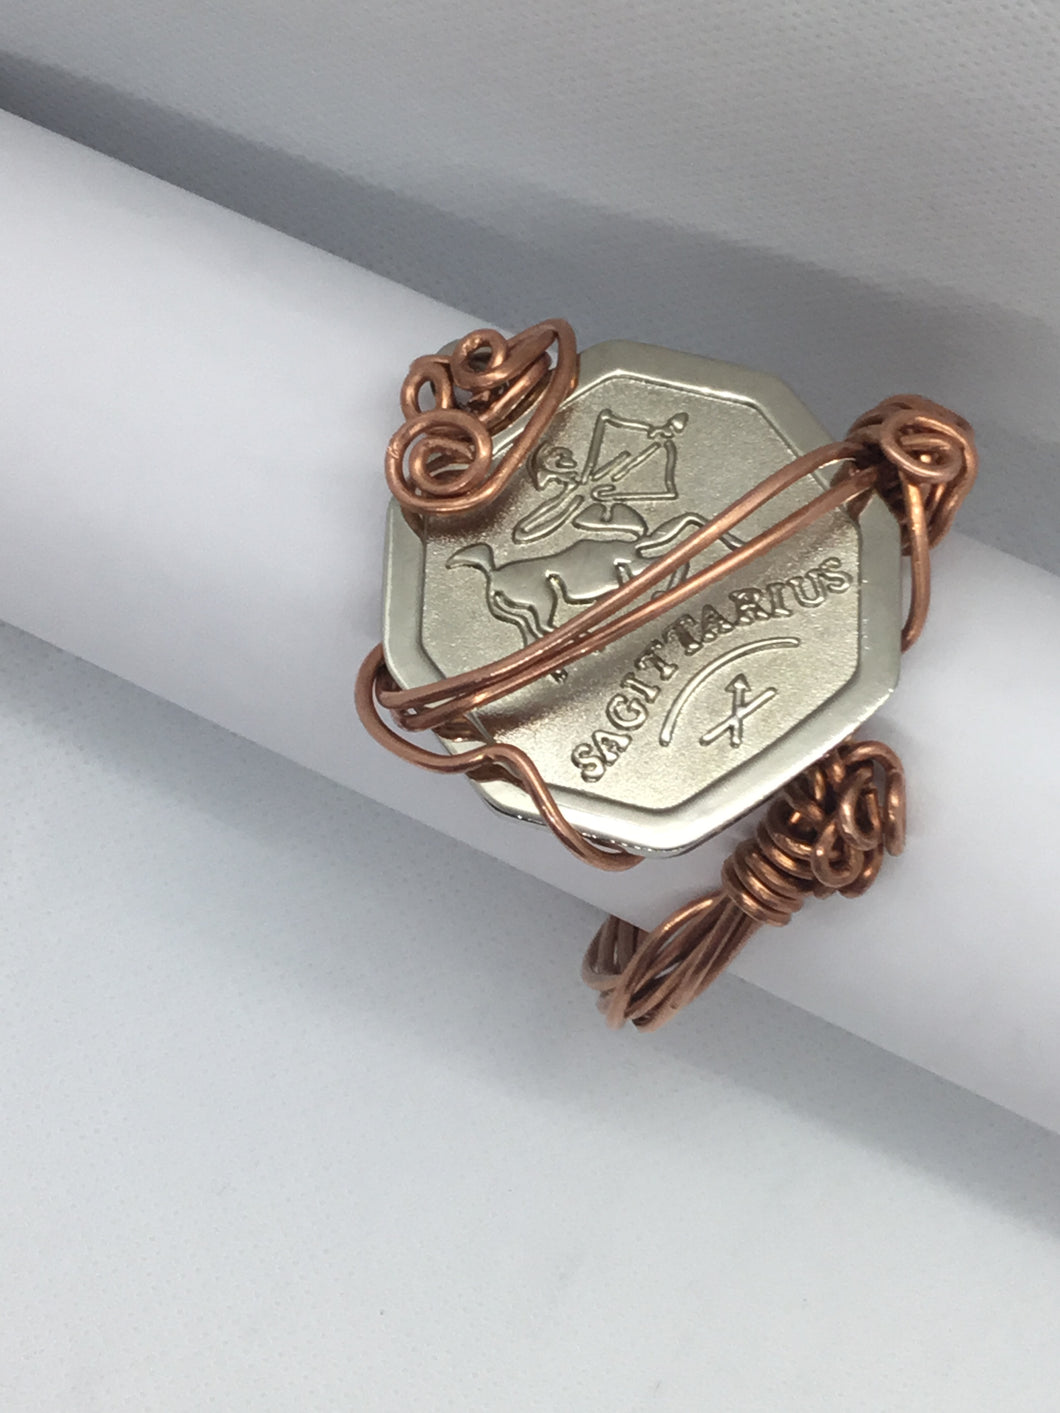 The zodiac sign wrapped in copper bracelet